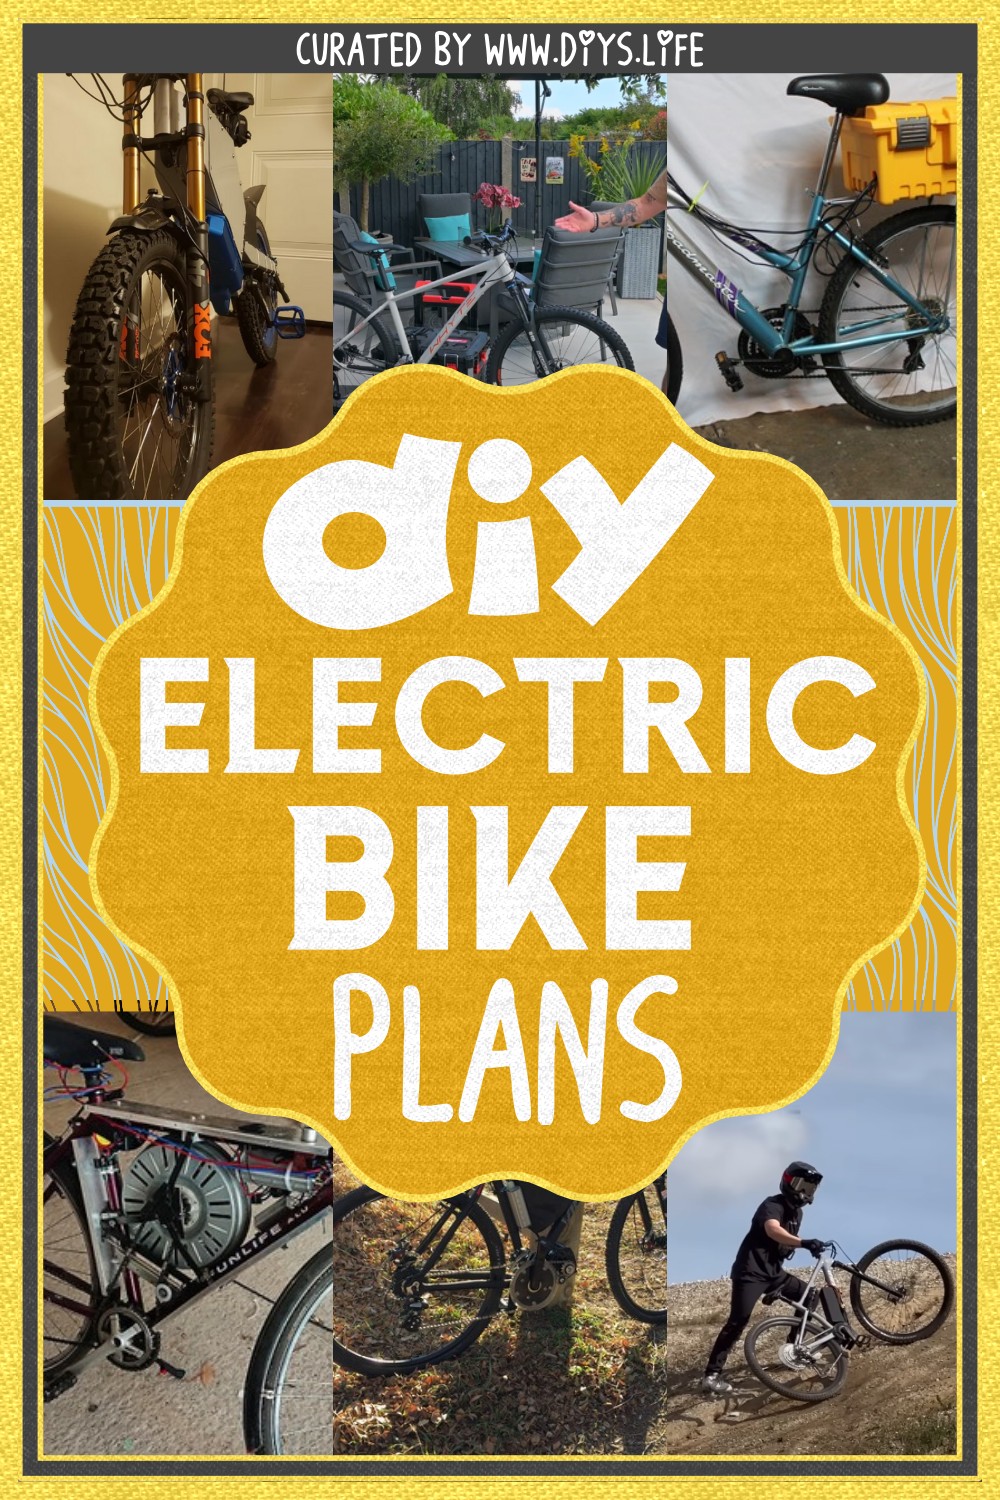 DIY Electric Bike plans for everyone